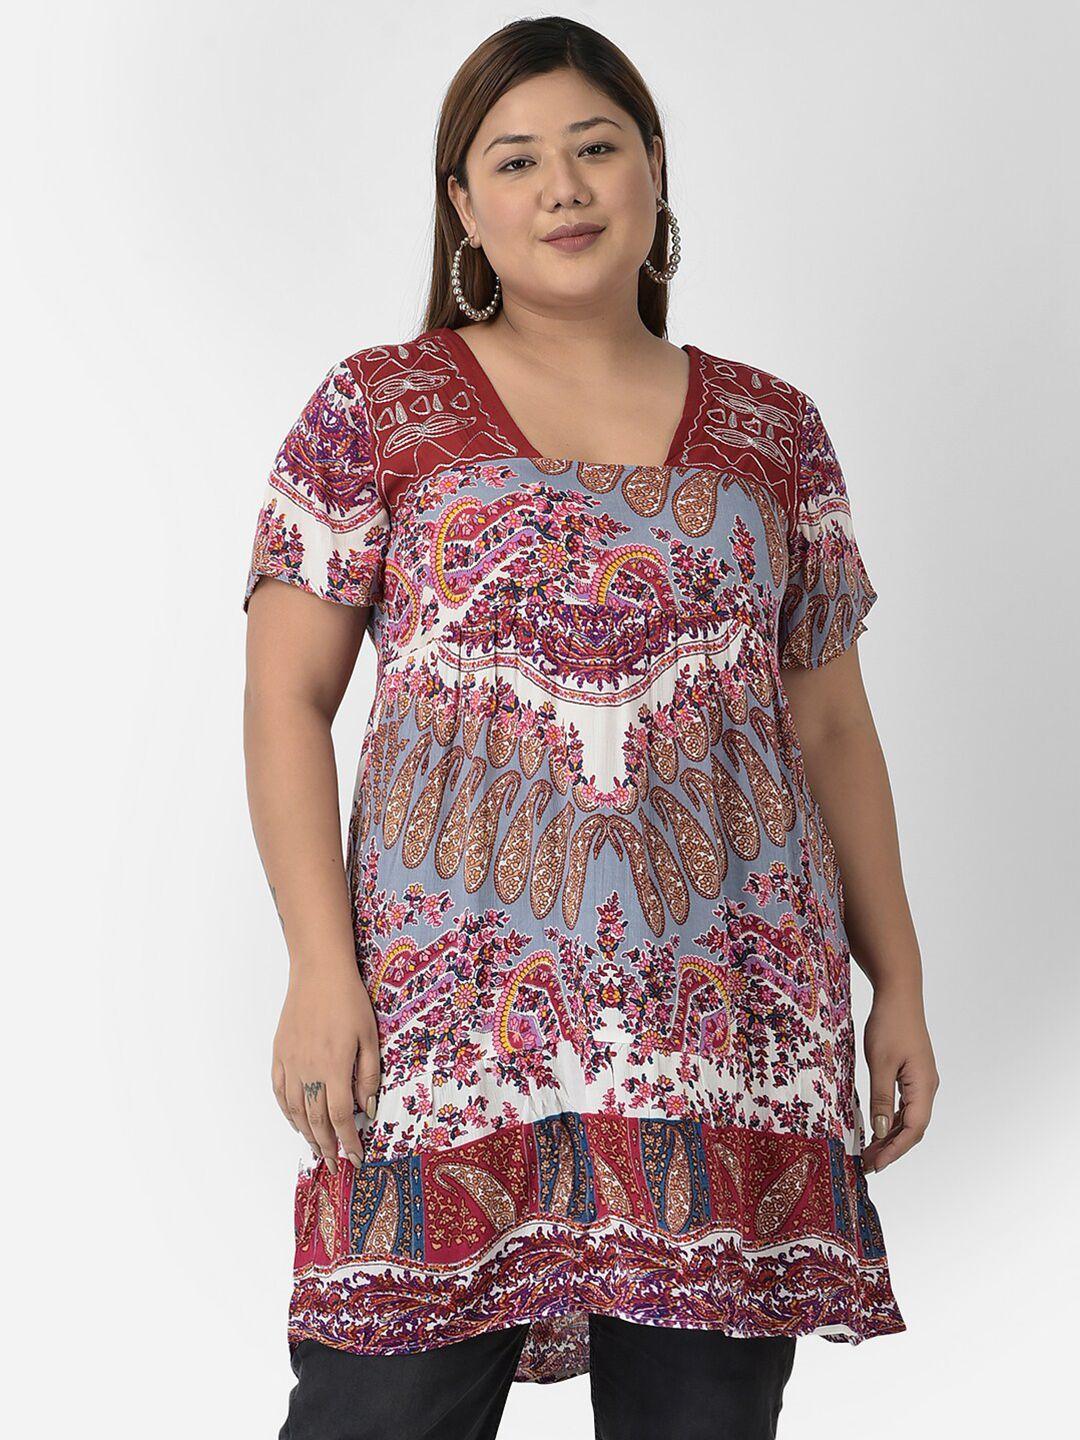 veldress-women-plus-size-multicoloured-print-top